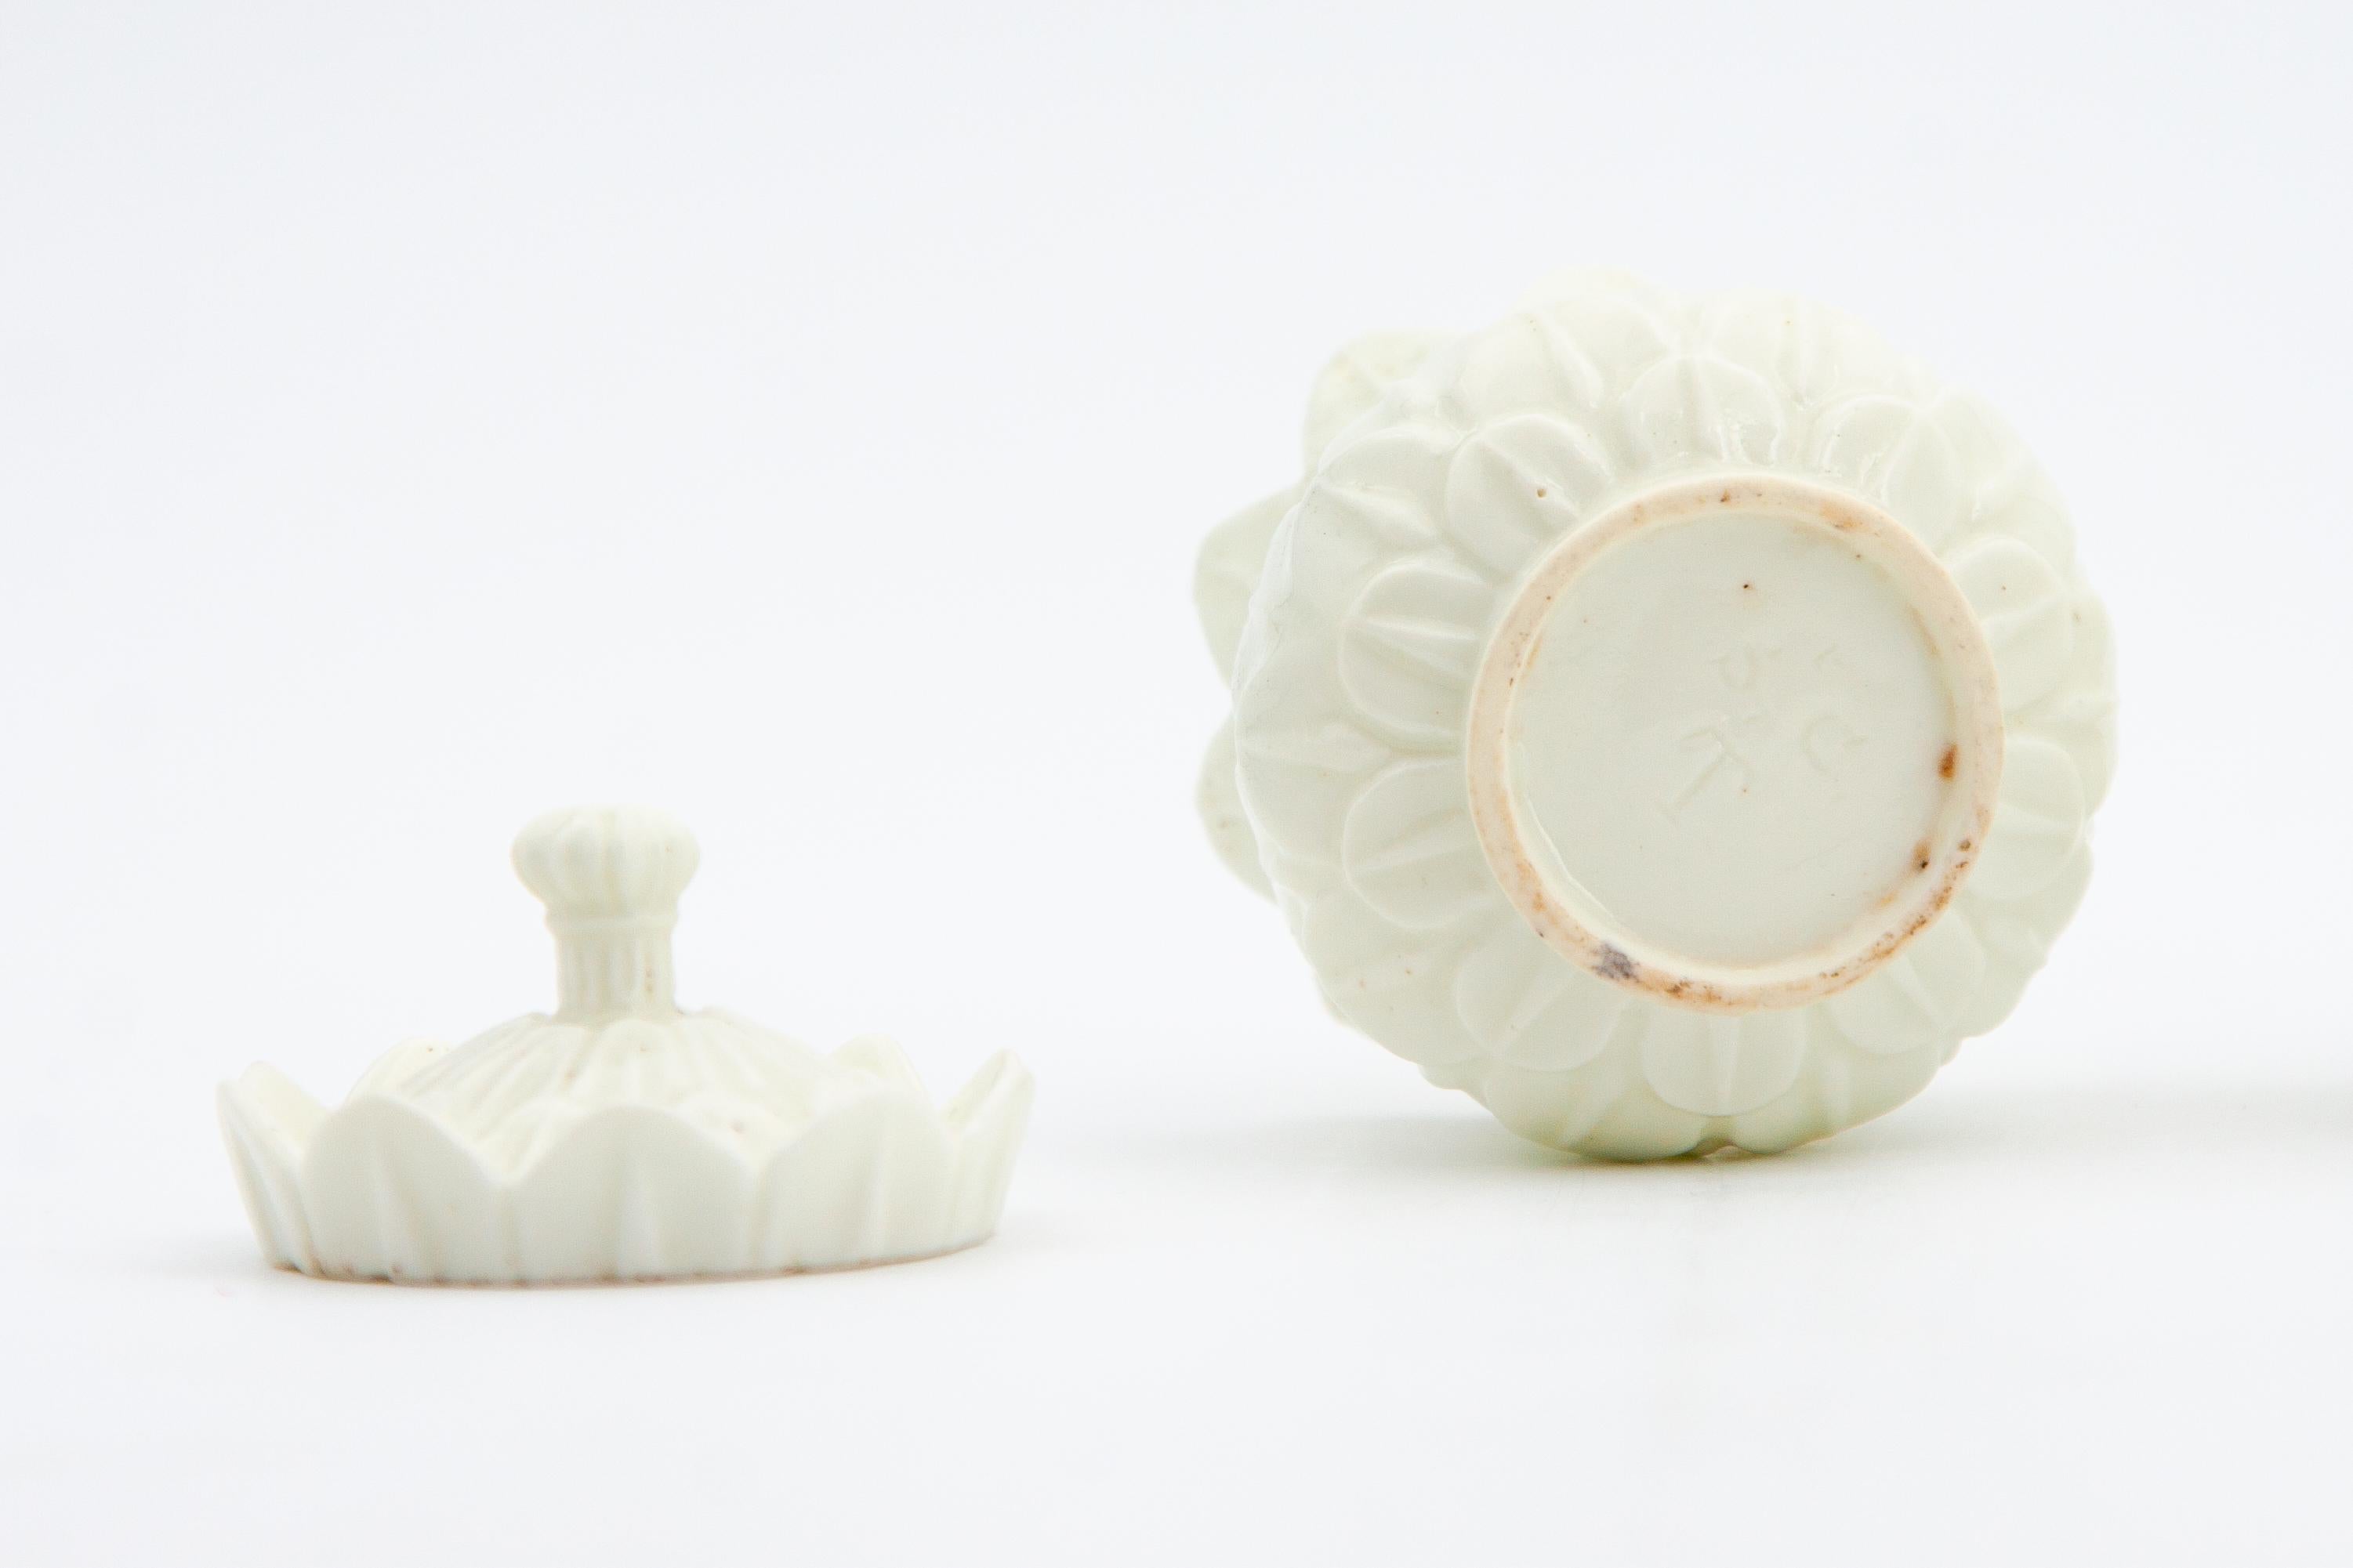 18th Century French Saint Cloud Porcelain Pots in the Form of Artichokes 1